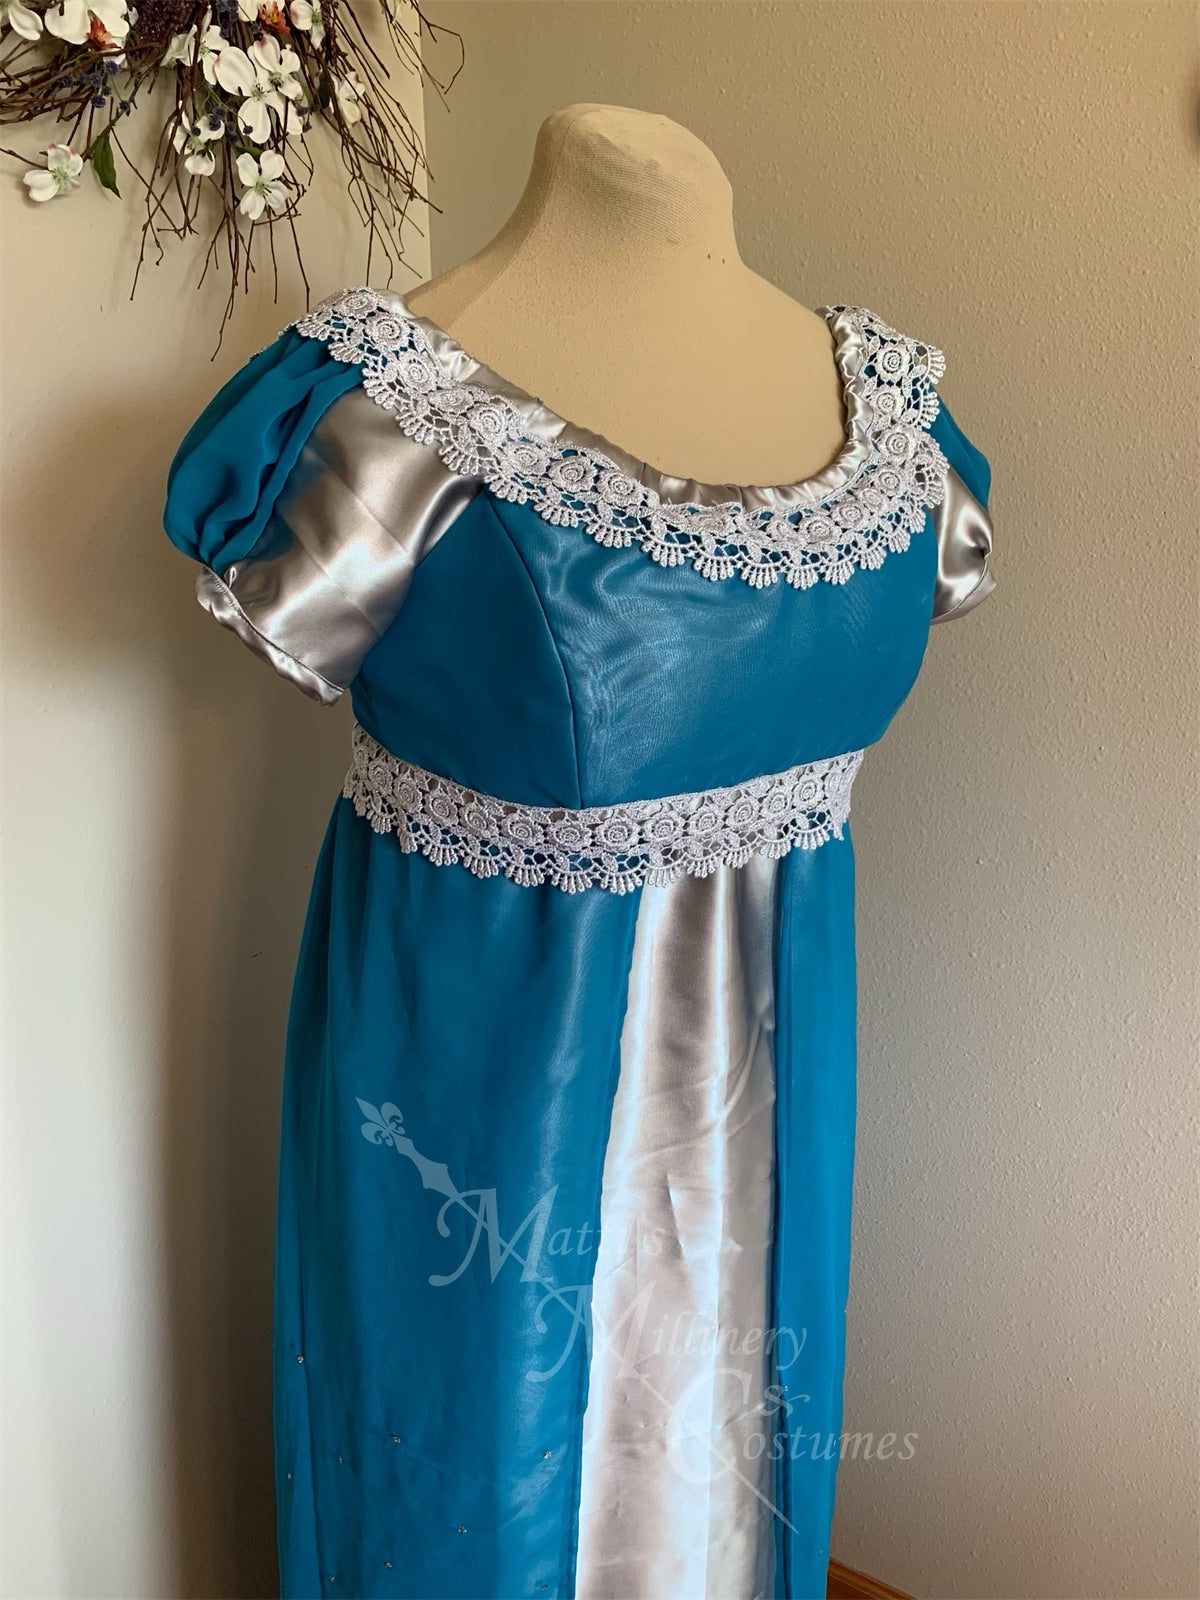 Teal Silver Elegant Regency Jane Austen Ball Gown Evening Dress in silk dupioni & sari silk